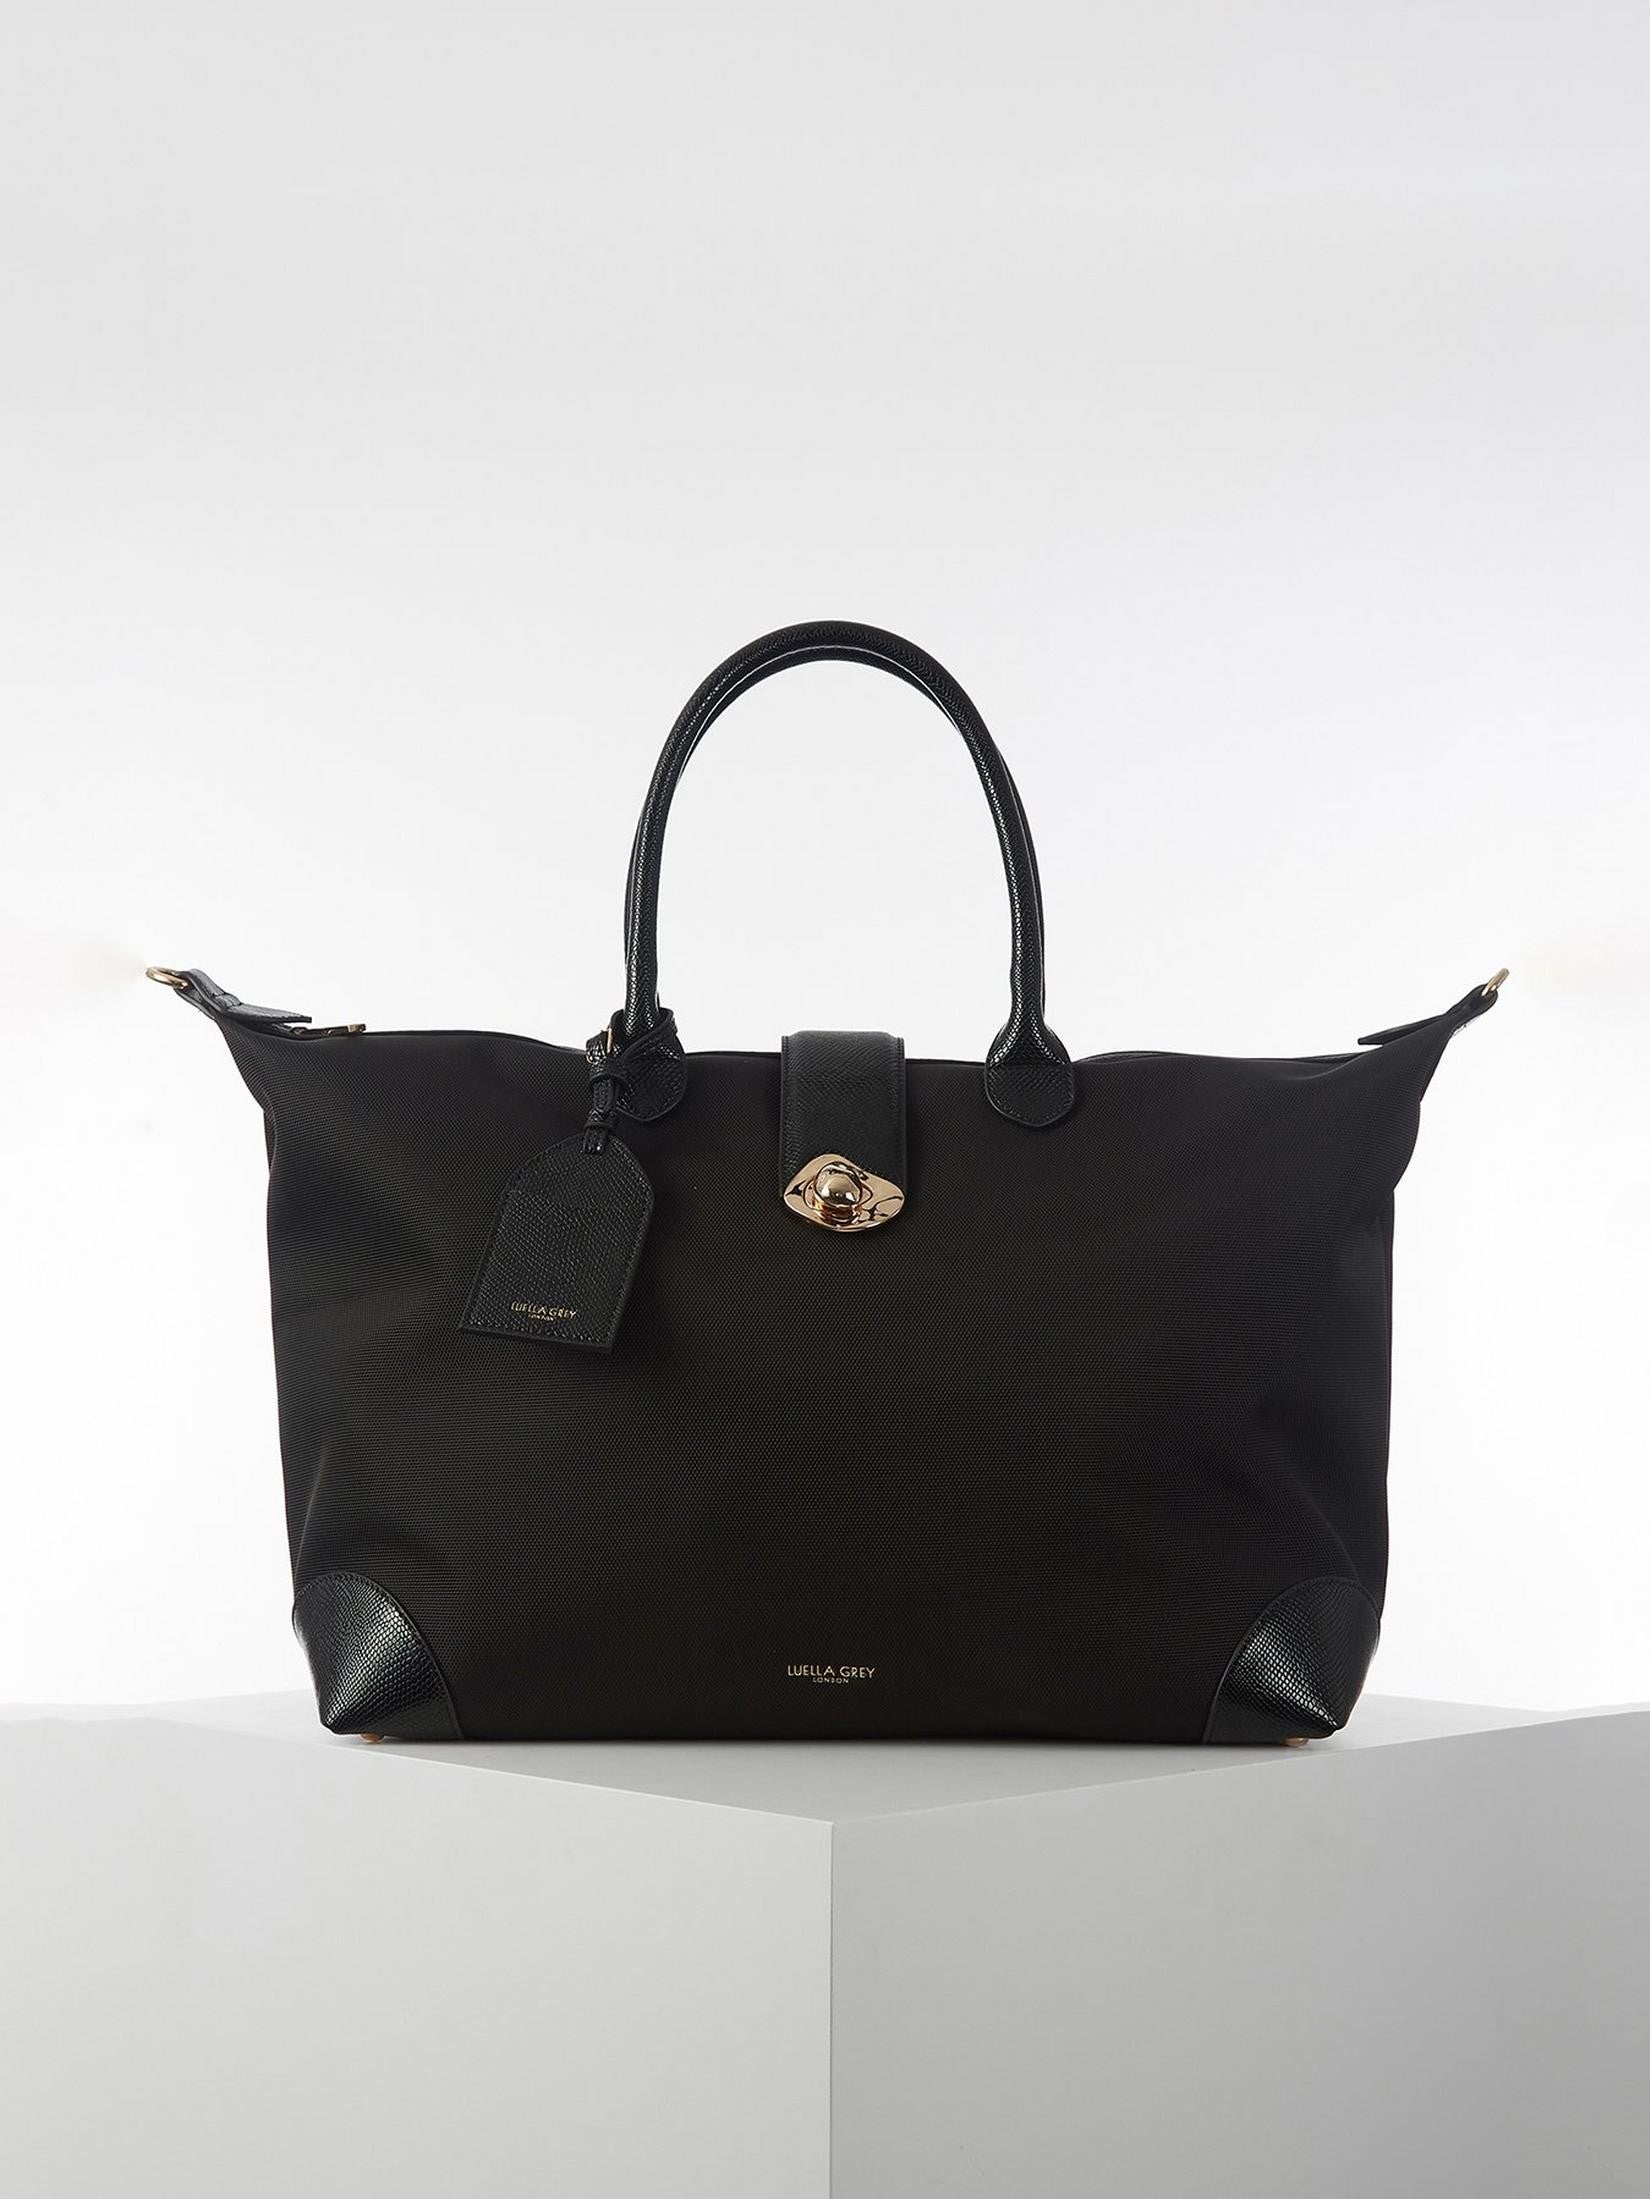 Luella Grey Lucinda Weekend Bag Black